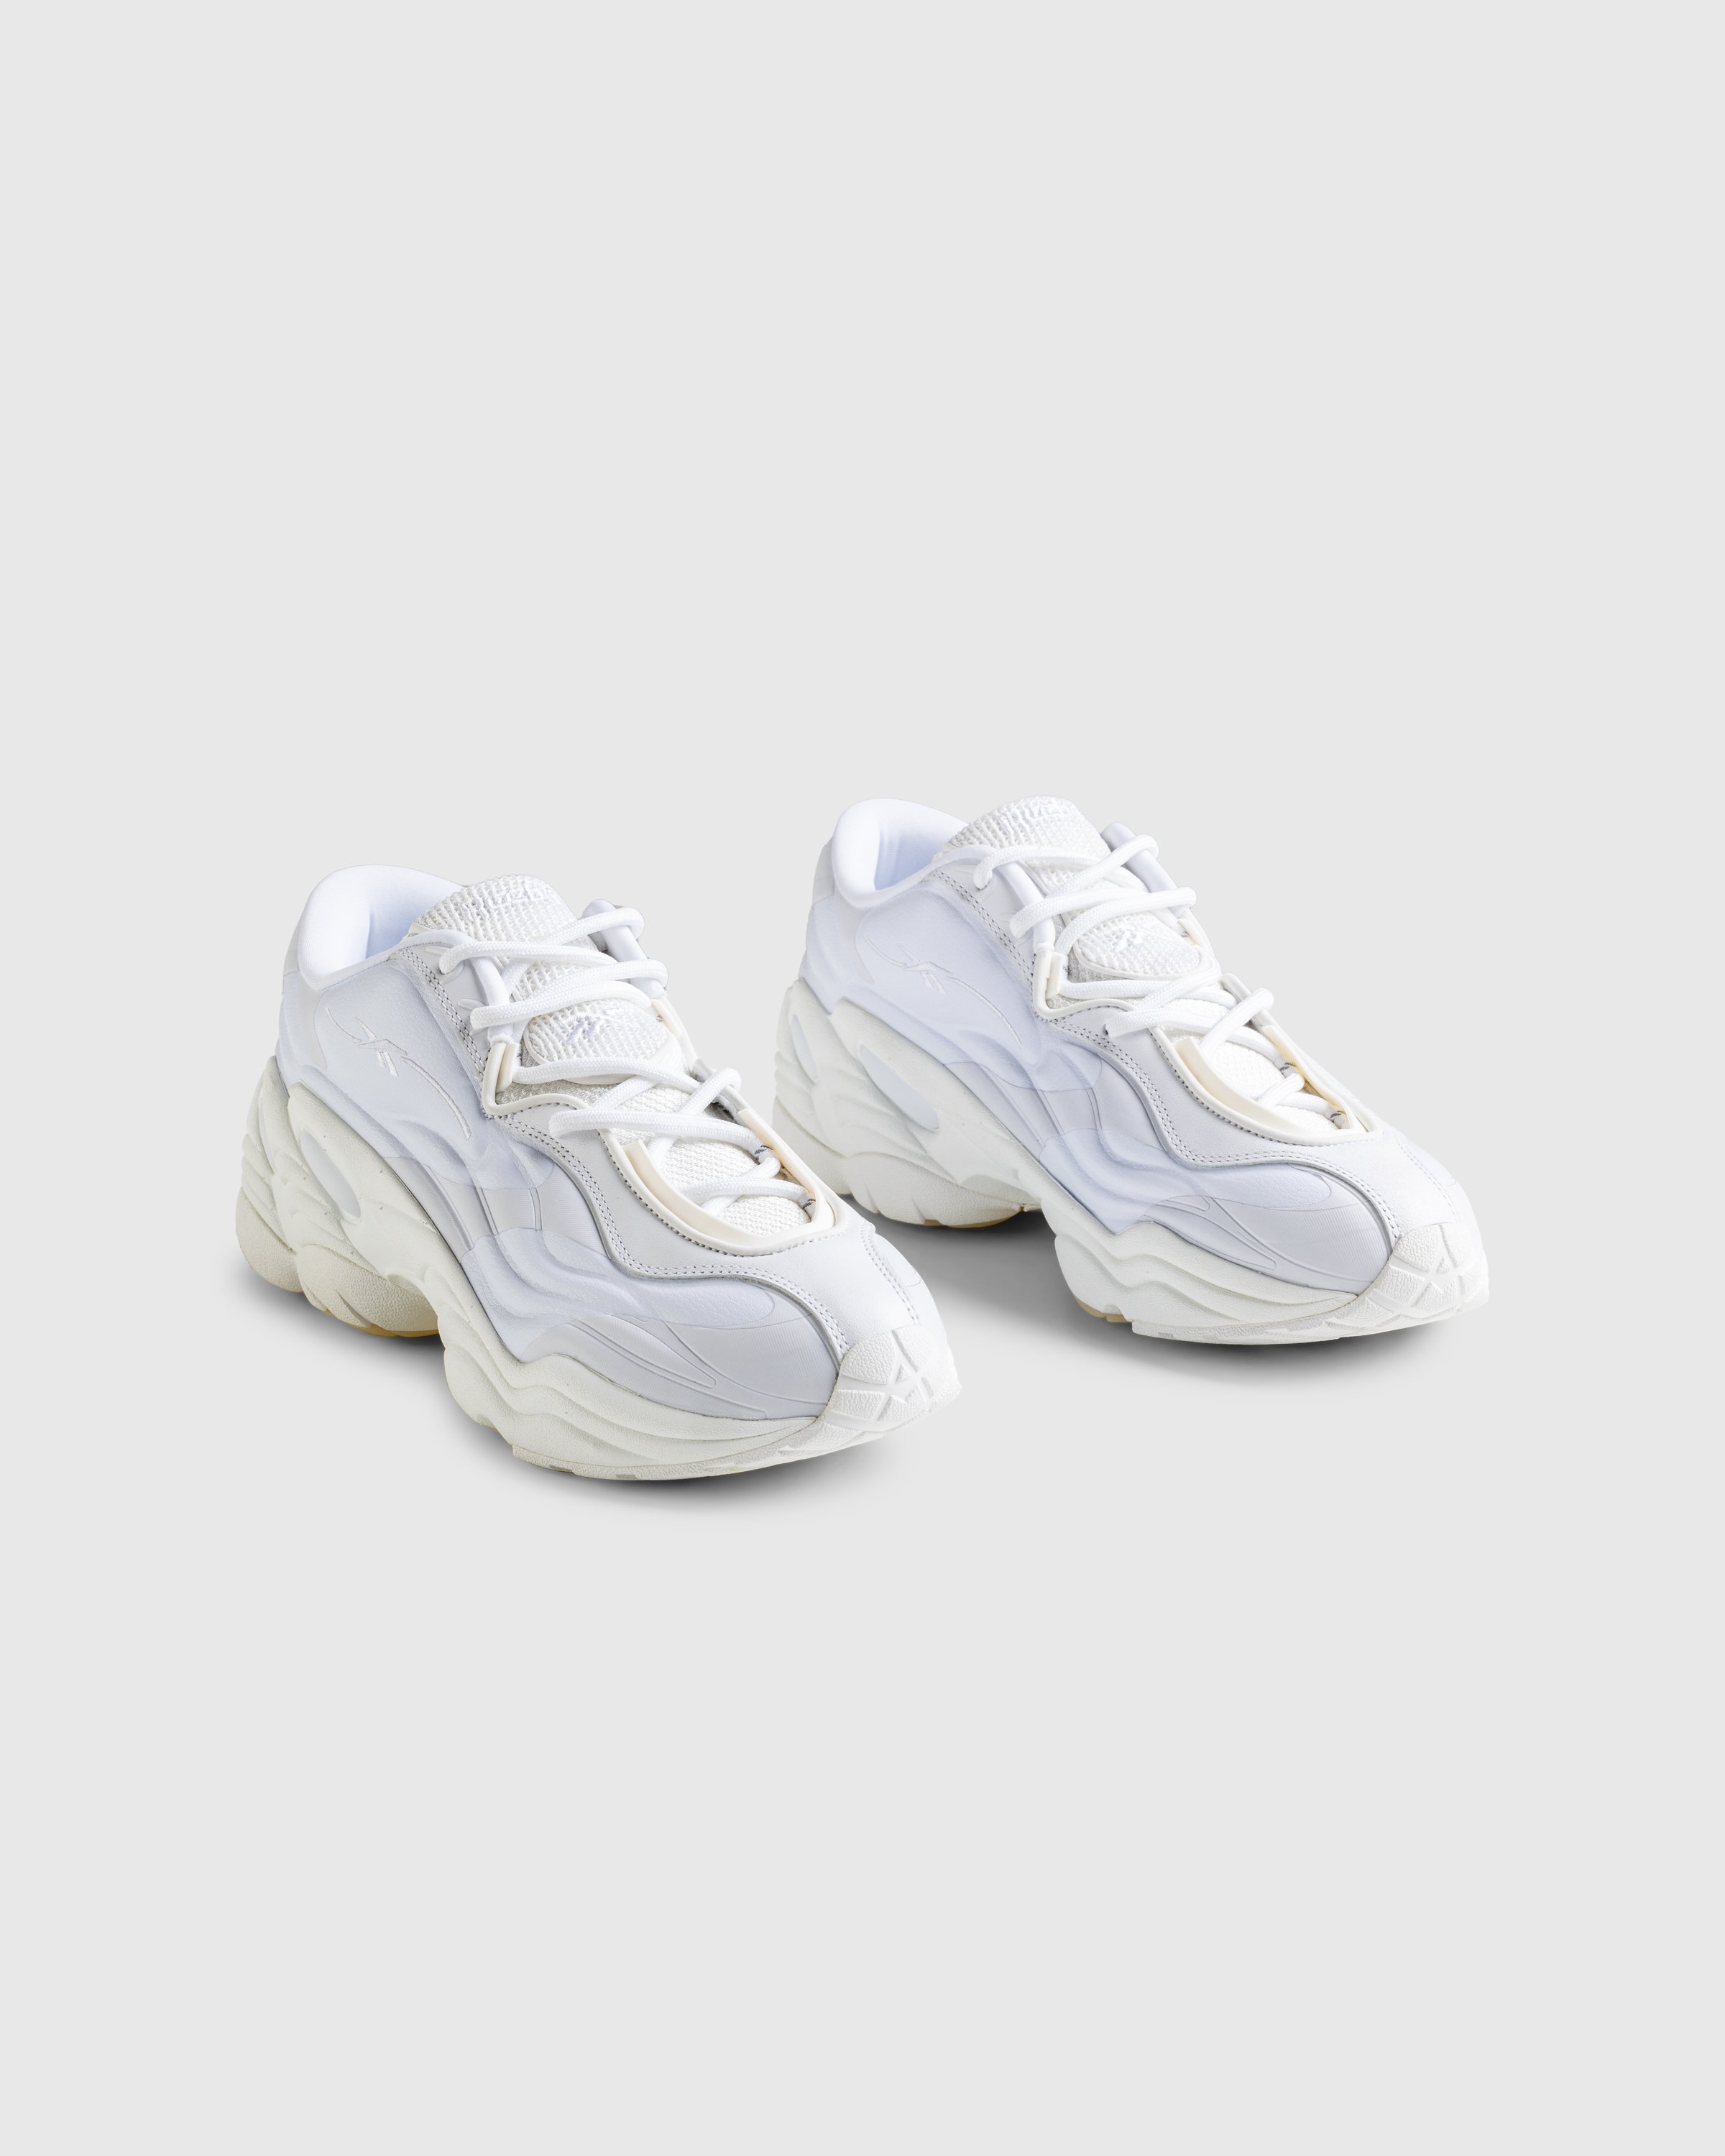 Reebok - Dmx Run 6 Modern White White - Footwear - White - Image 3